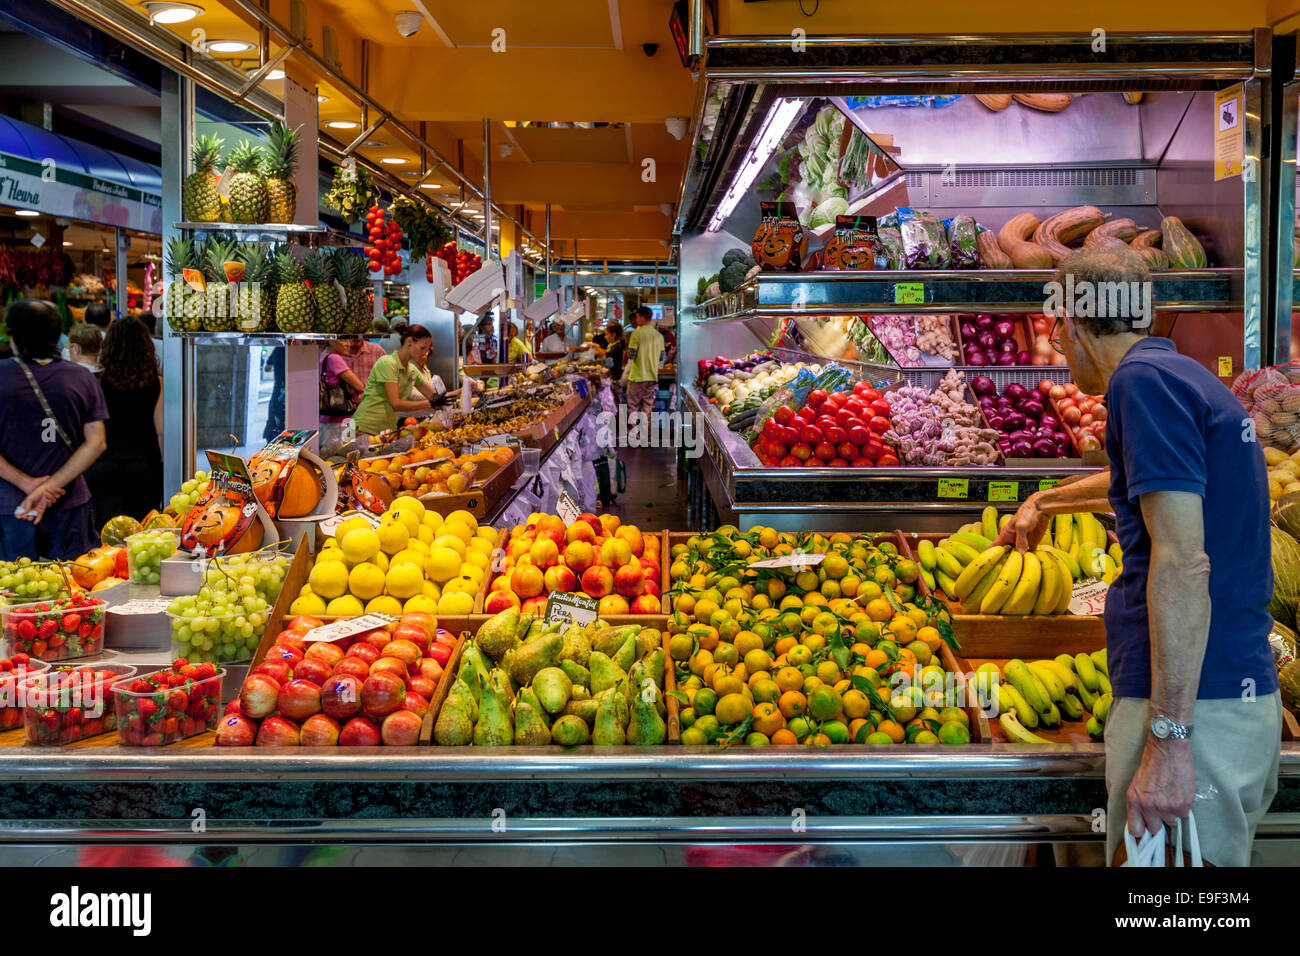 Man Buying Fruit & Vegetables, Mercat De L'Olivar, Palma de Mallorca, Spain Stock Photo